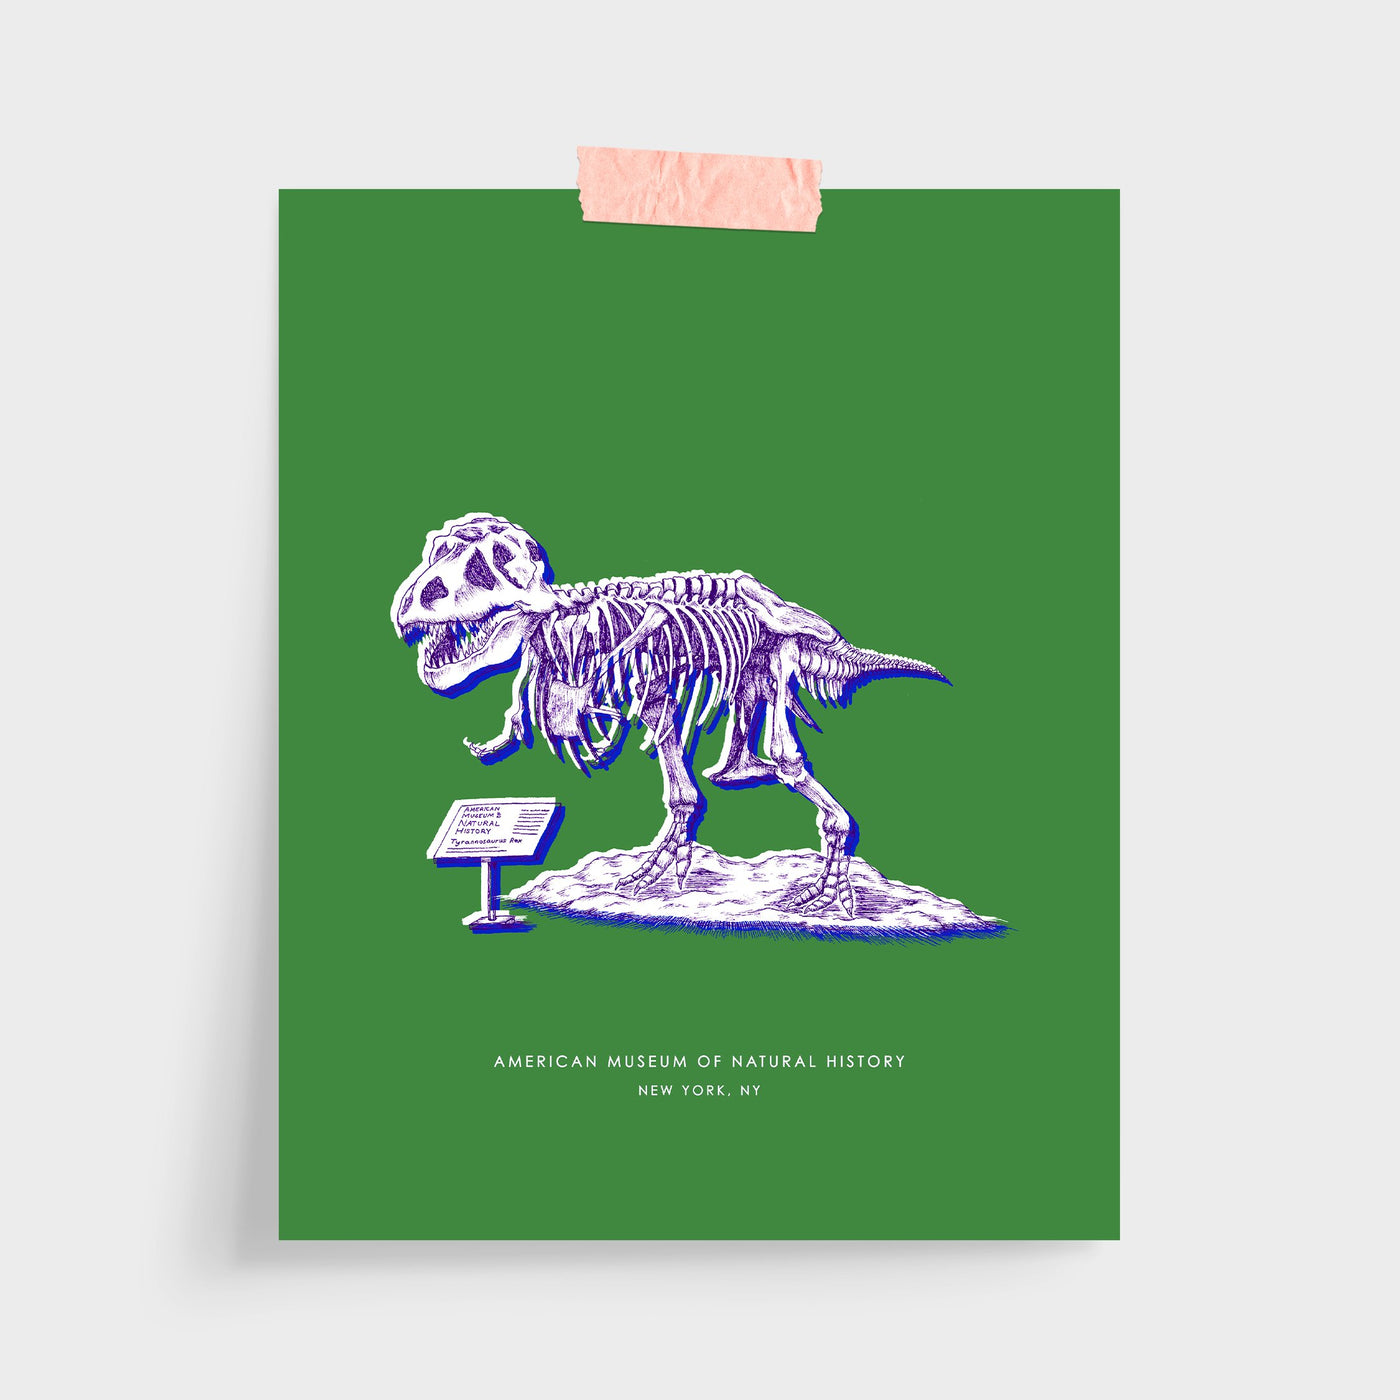 Gallery Prints Green Print / 5x7 / Unframed New York Dinosaur Print Katie Kime